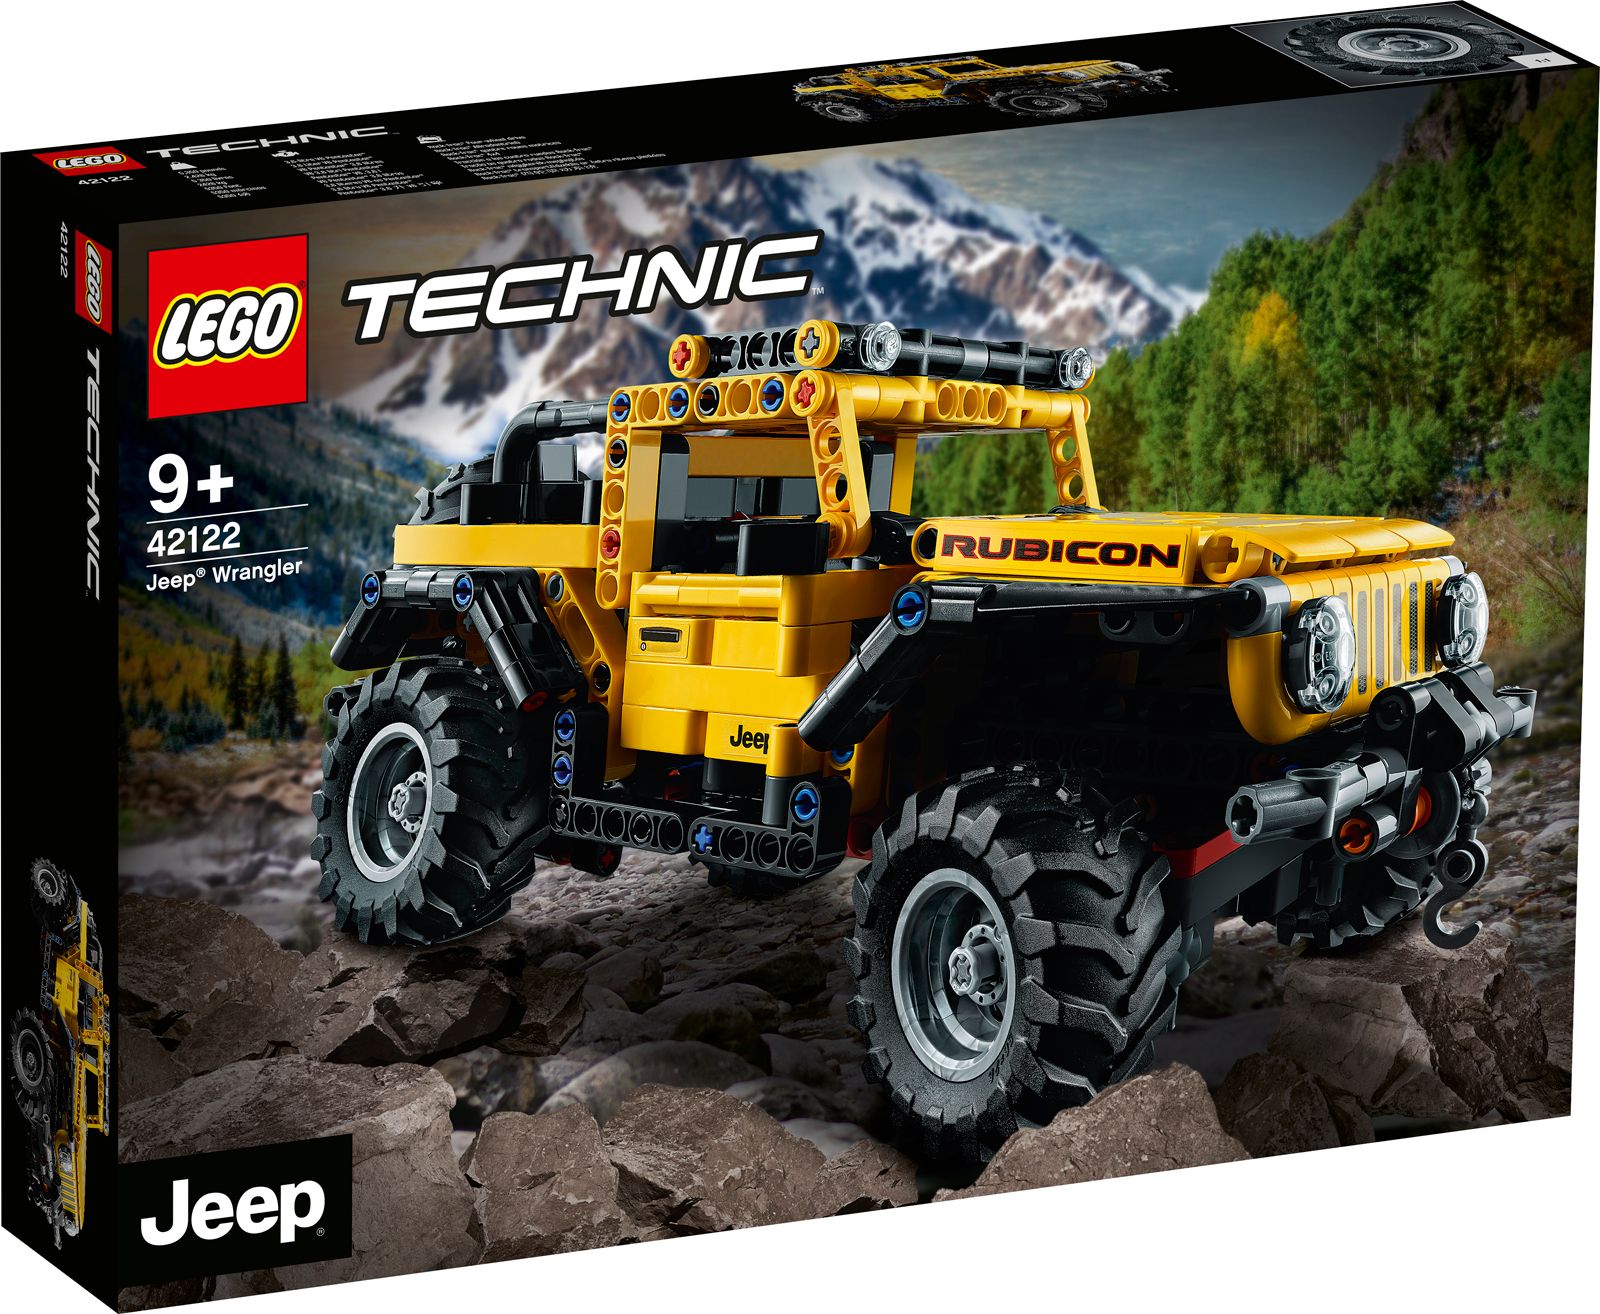 Lego's latest Technic set is the iconic Jeep Wrangler photo 2